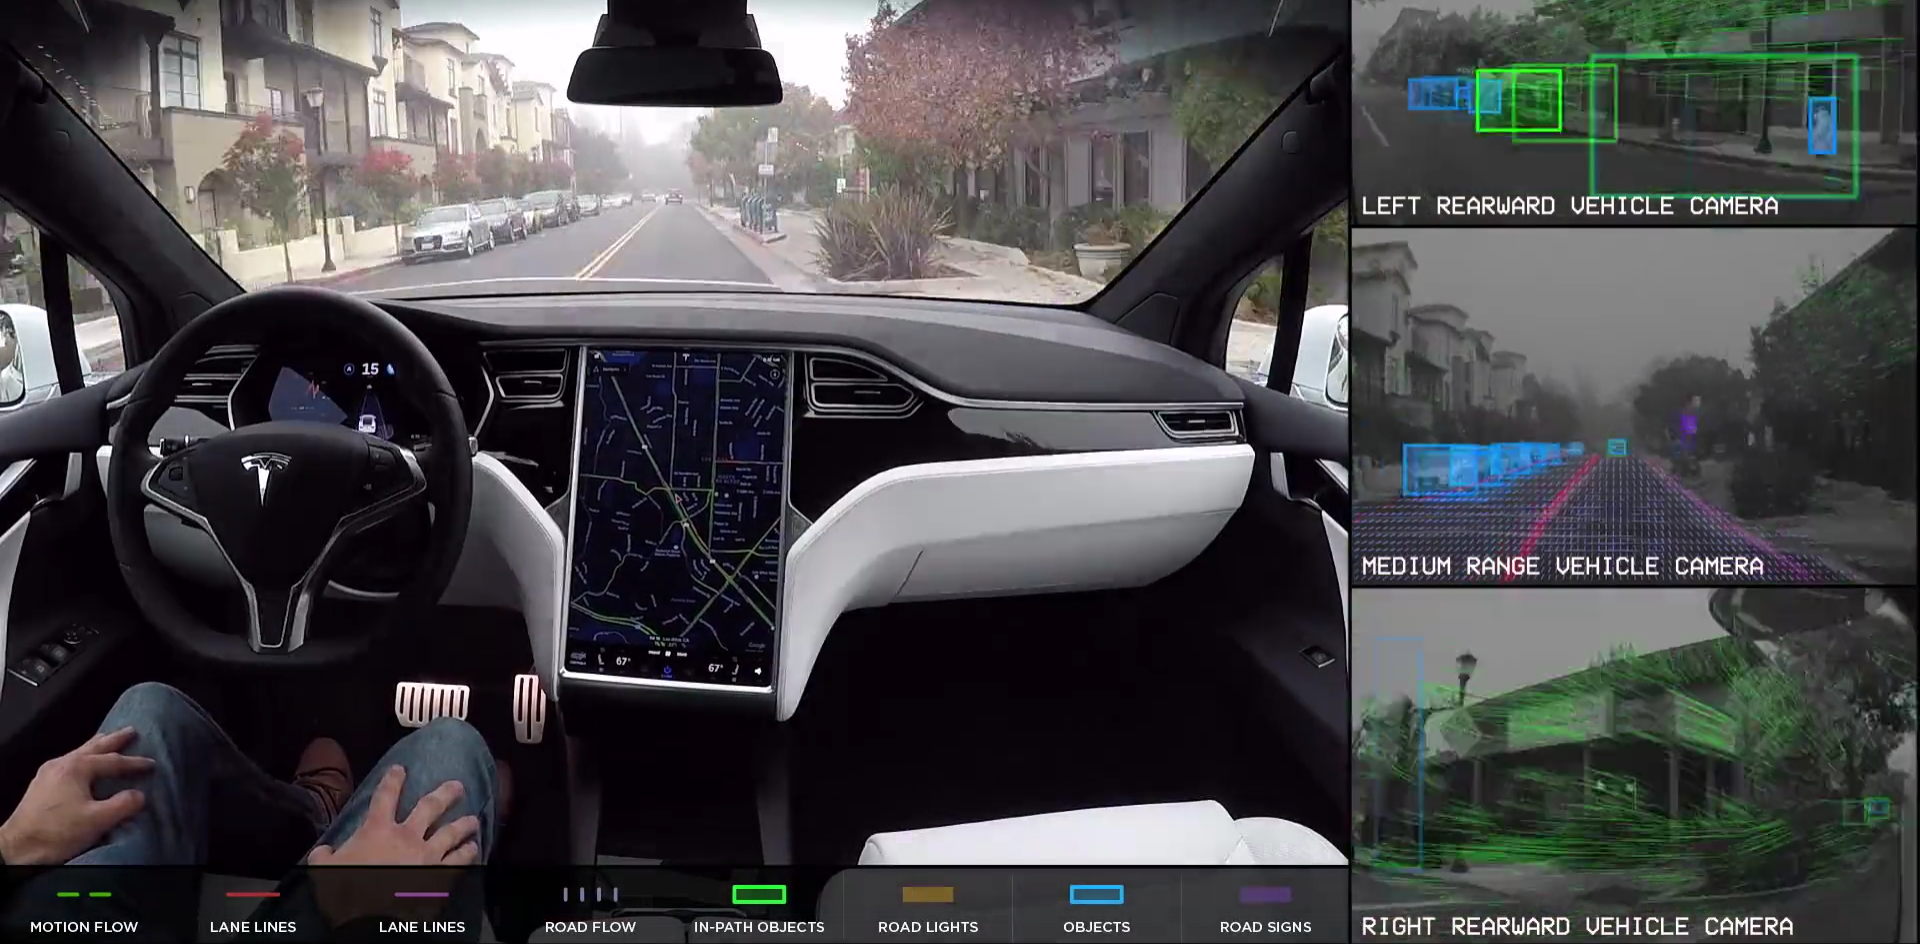 Elon Musk clarifies Tesla's plan for level 5 fully autonomous driving: 2 years away from sleeping in the car - Electrek